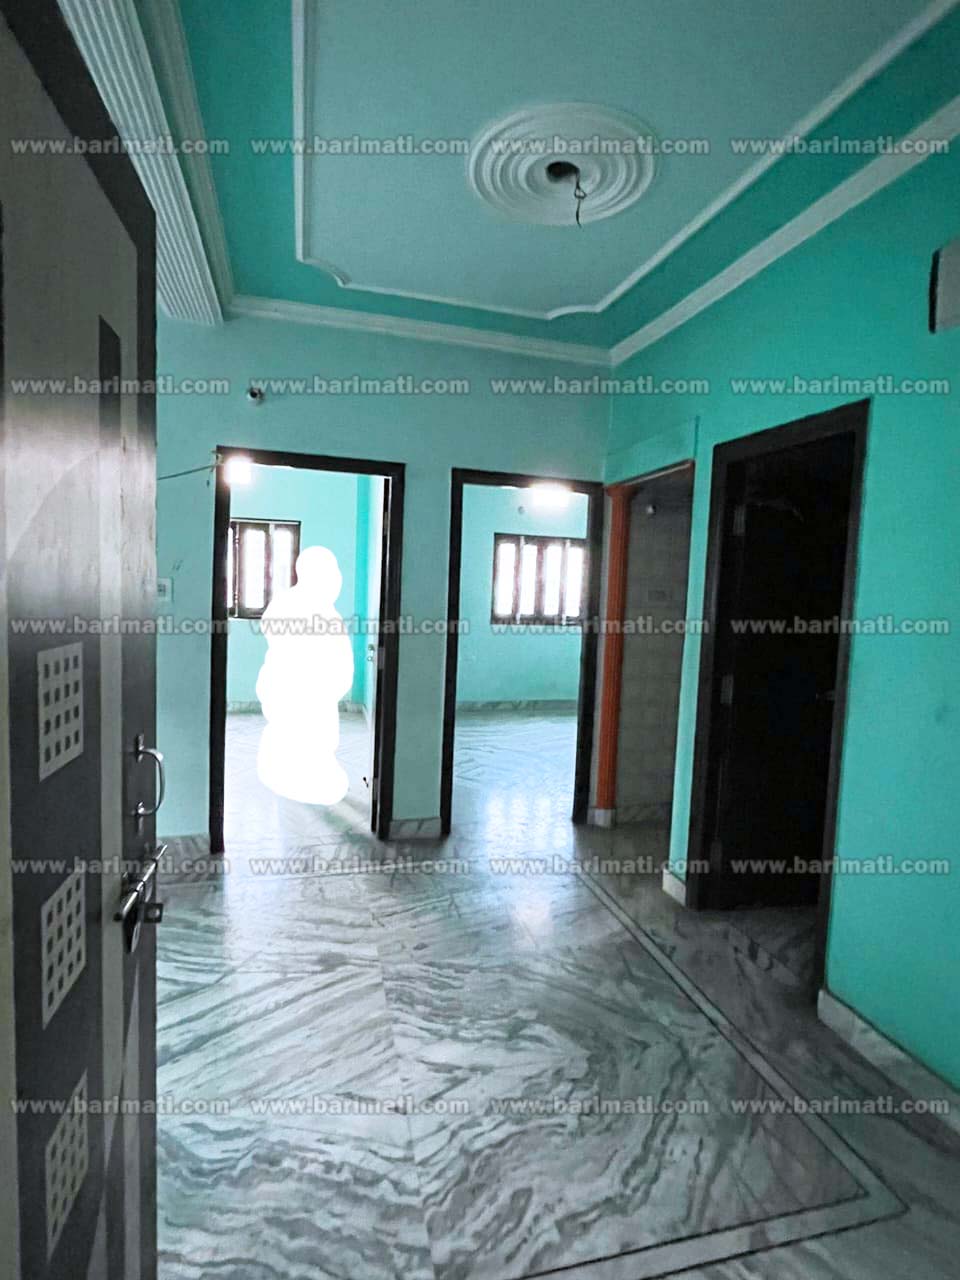 Inviting 2-bedroom residence in East Lakshmi Nagar, Patna, available for rent under 7000